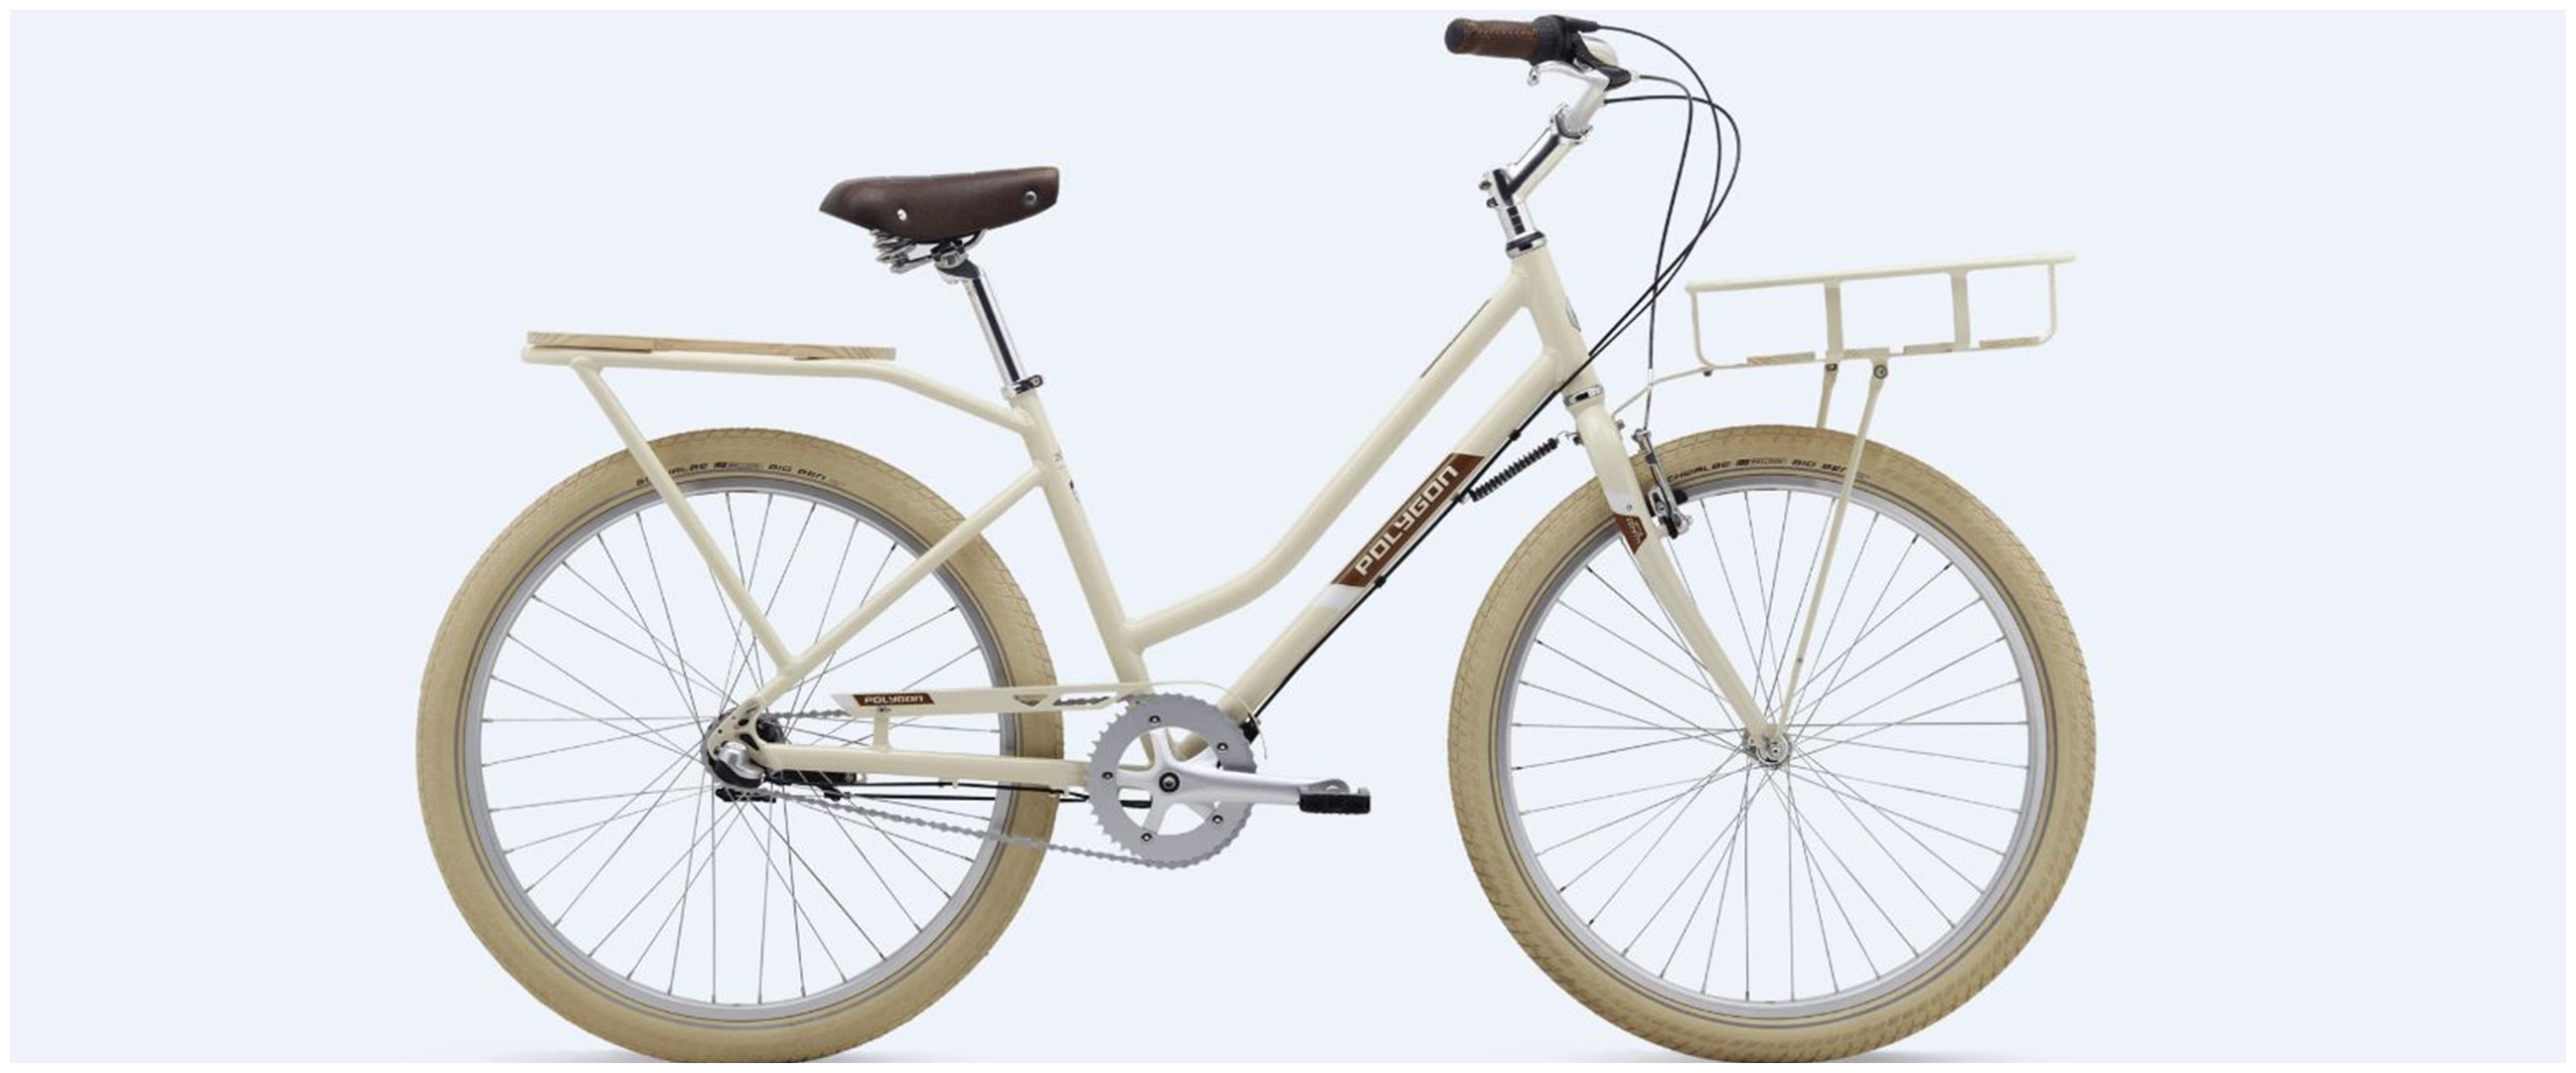 Harga sepeda Polygon Zenith dan spesifikasinya, nyaman dan stylish